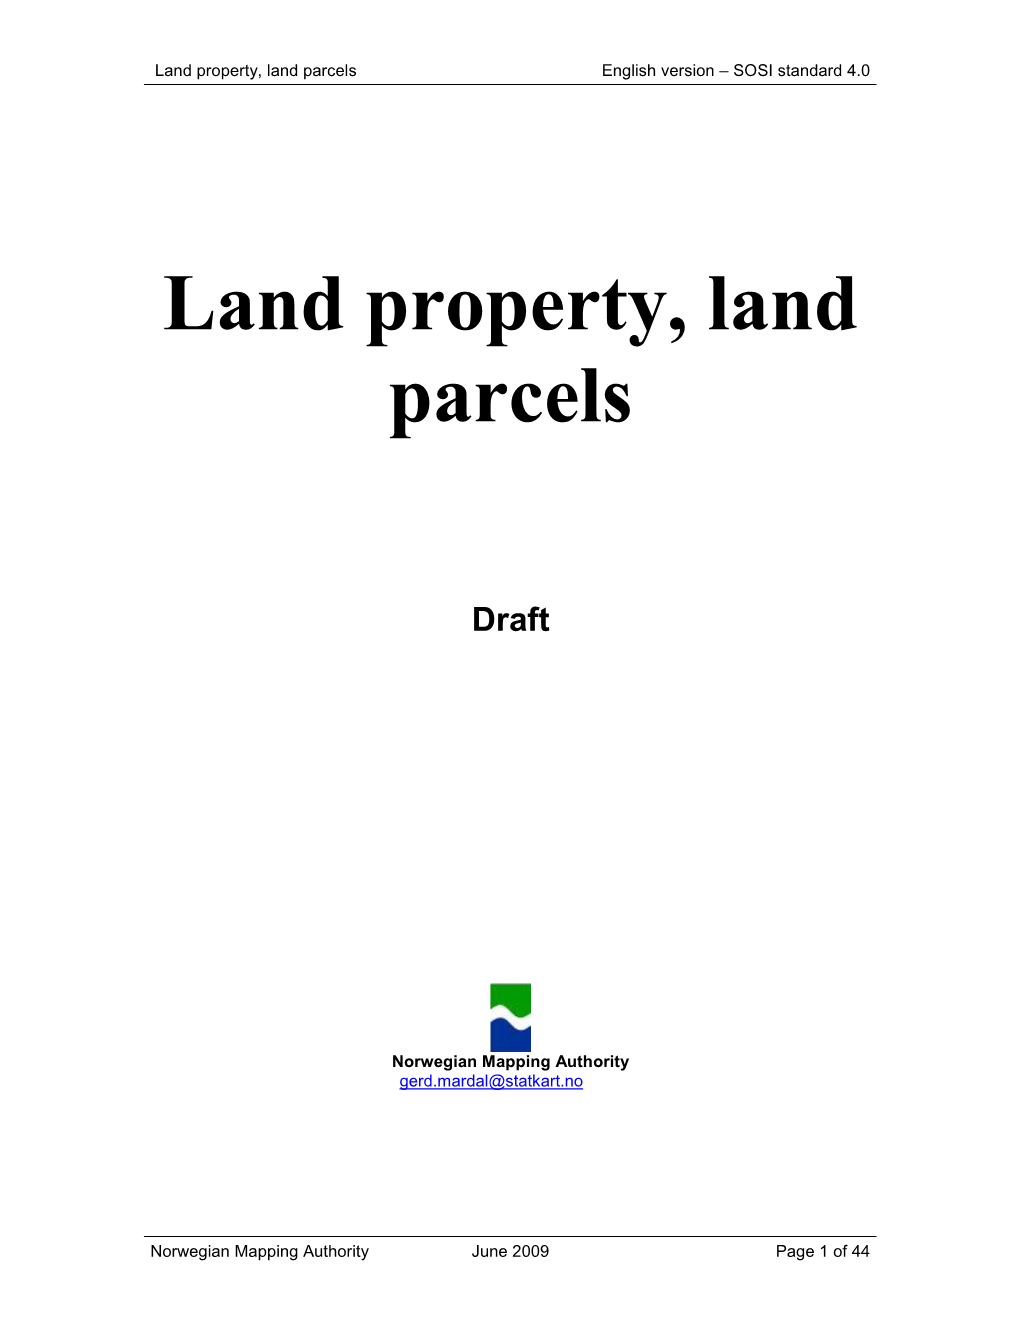 Land Property, Land Parcels (Pdf)